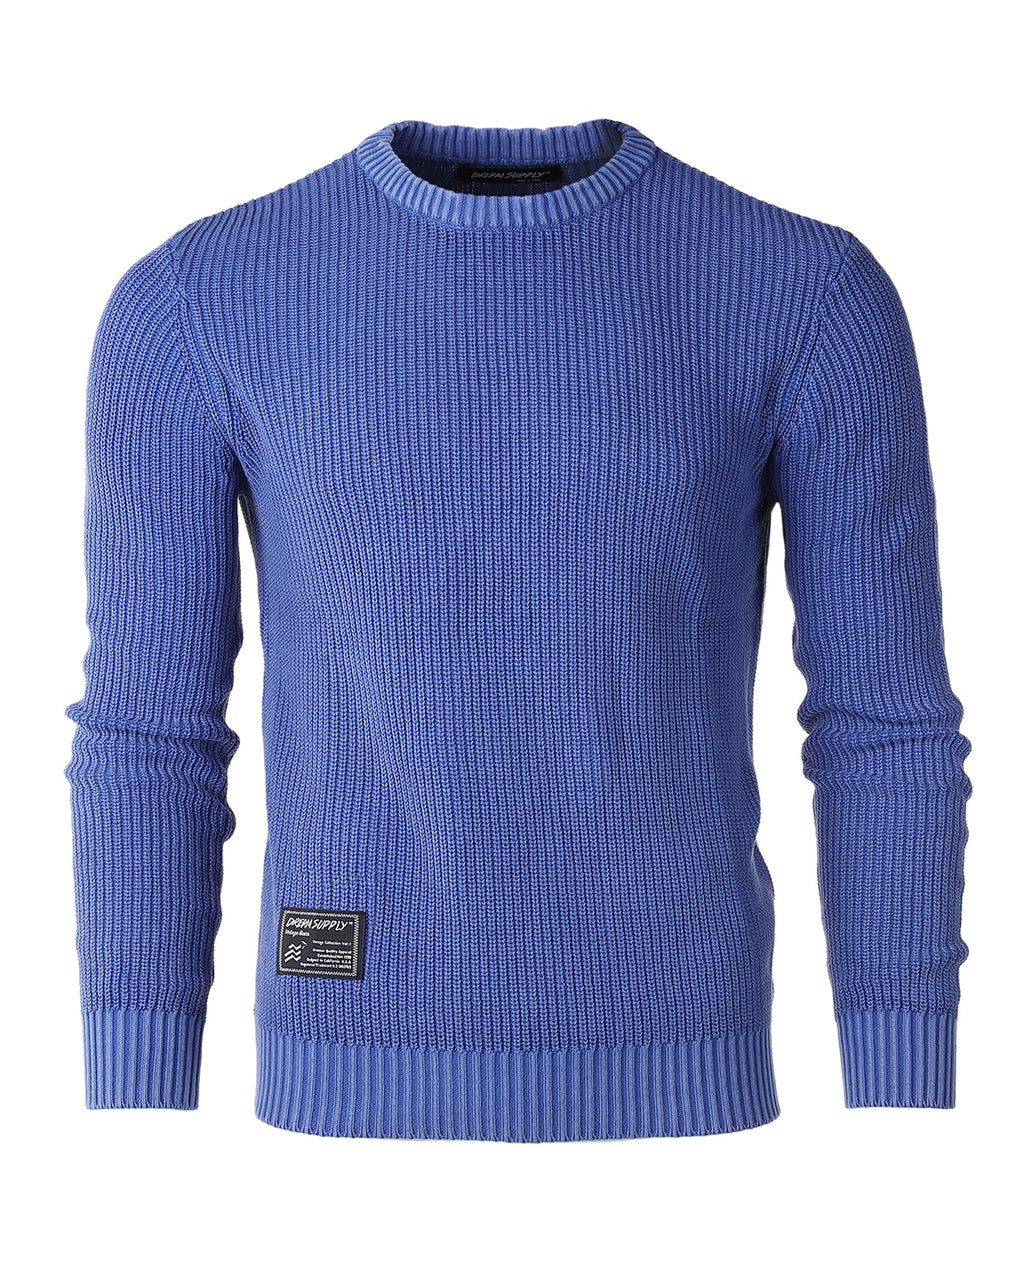 Free 3-day Shipping - ZIMEGO Mens Long Sleeve Stone Washed Vintage Crewneck Pullover Sweater